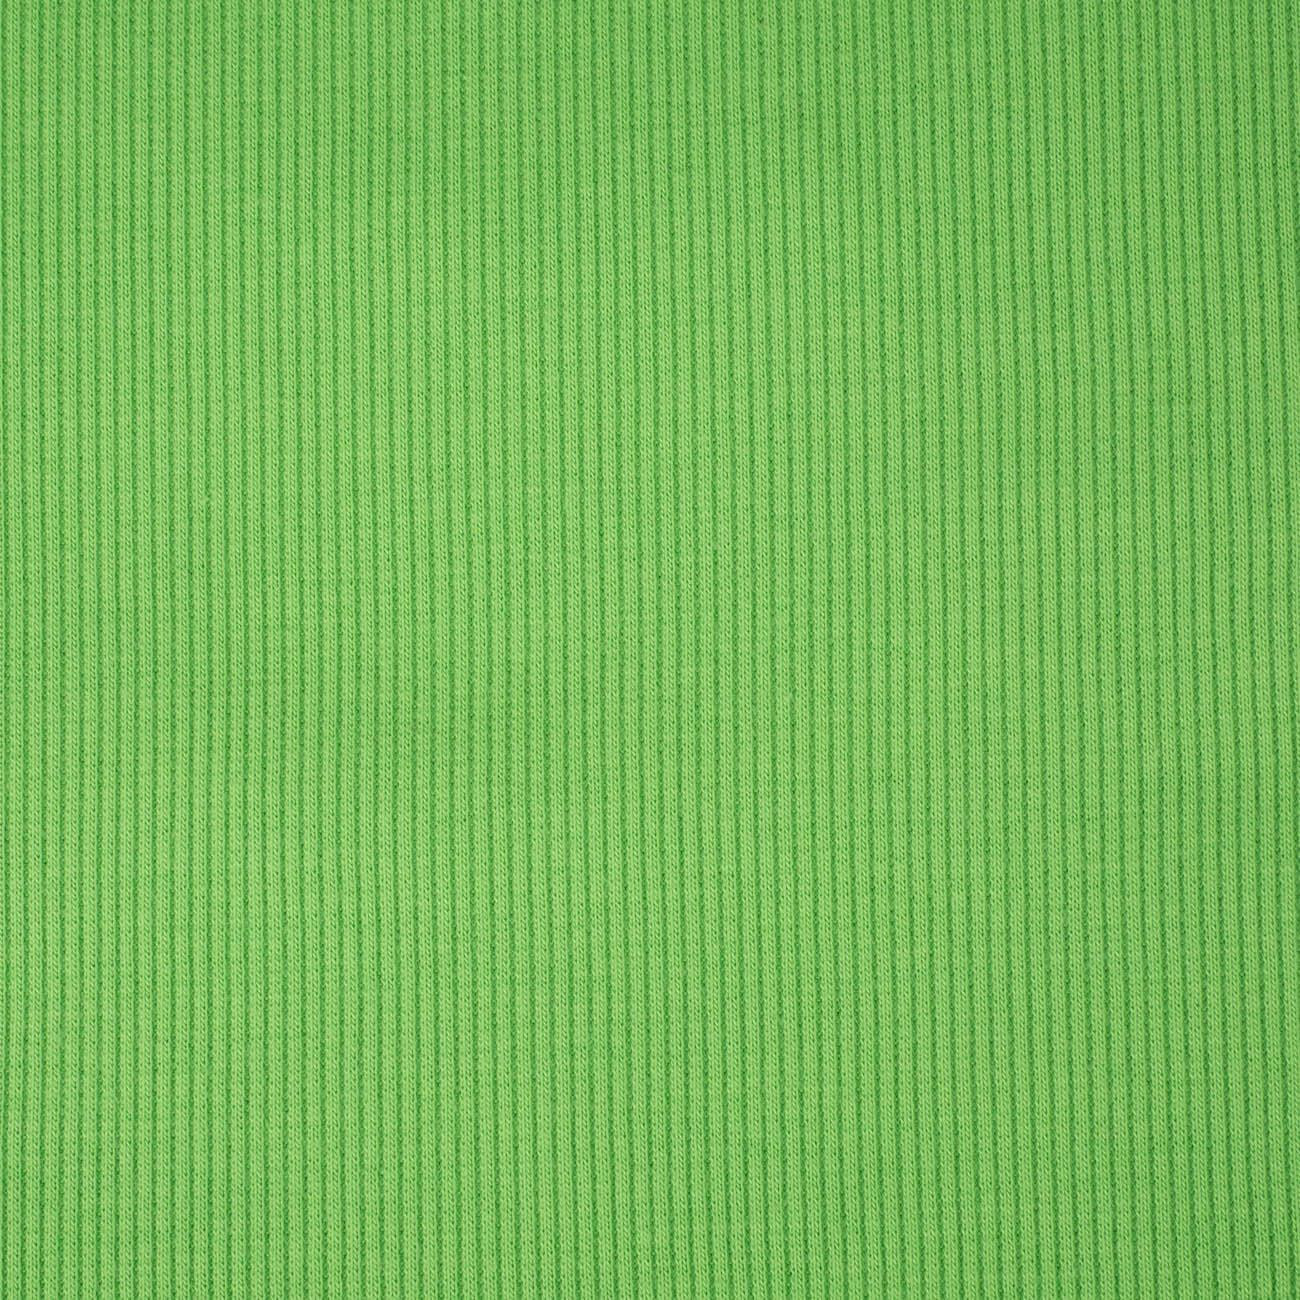 D-124 GRASSY - Ribbed knit fabric